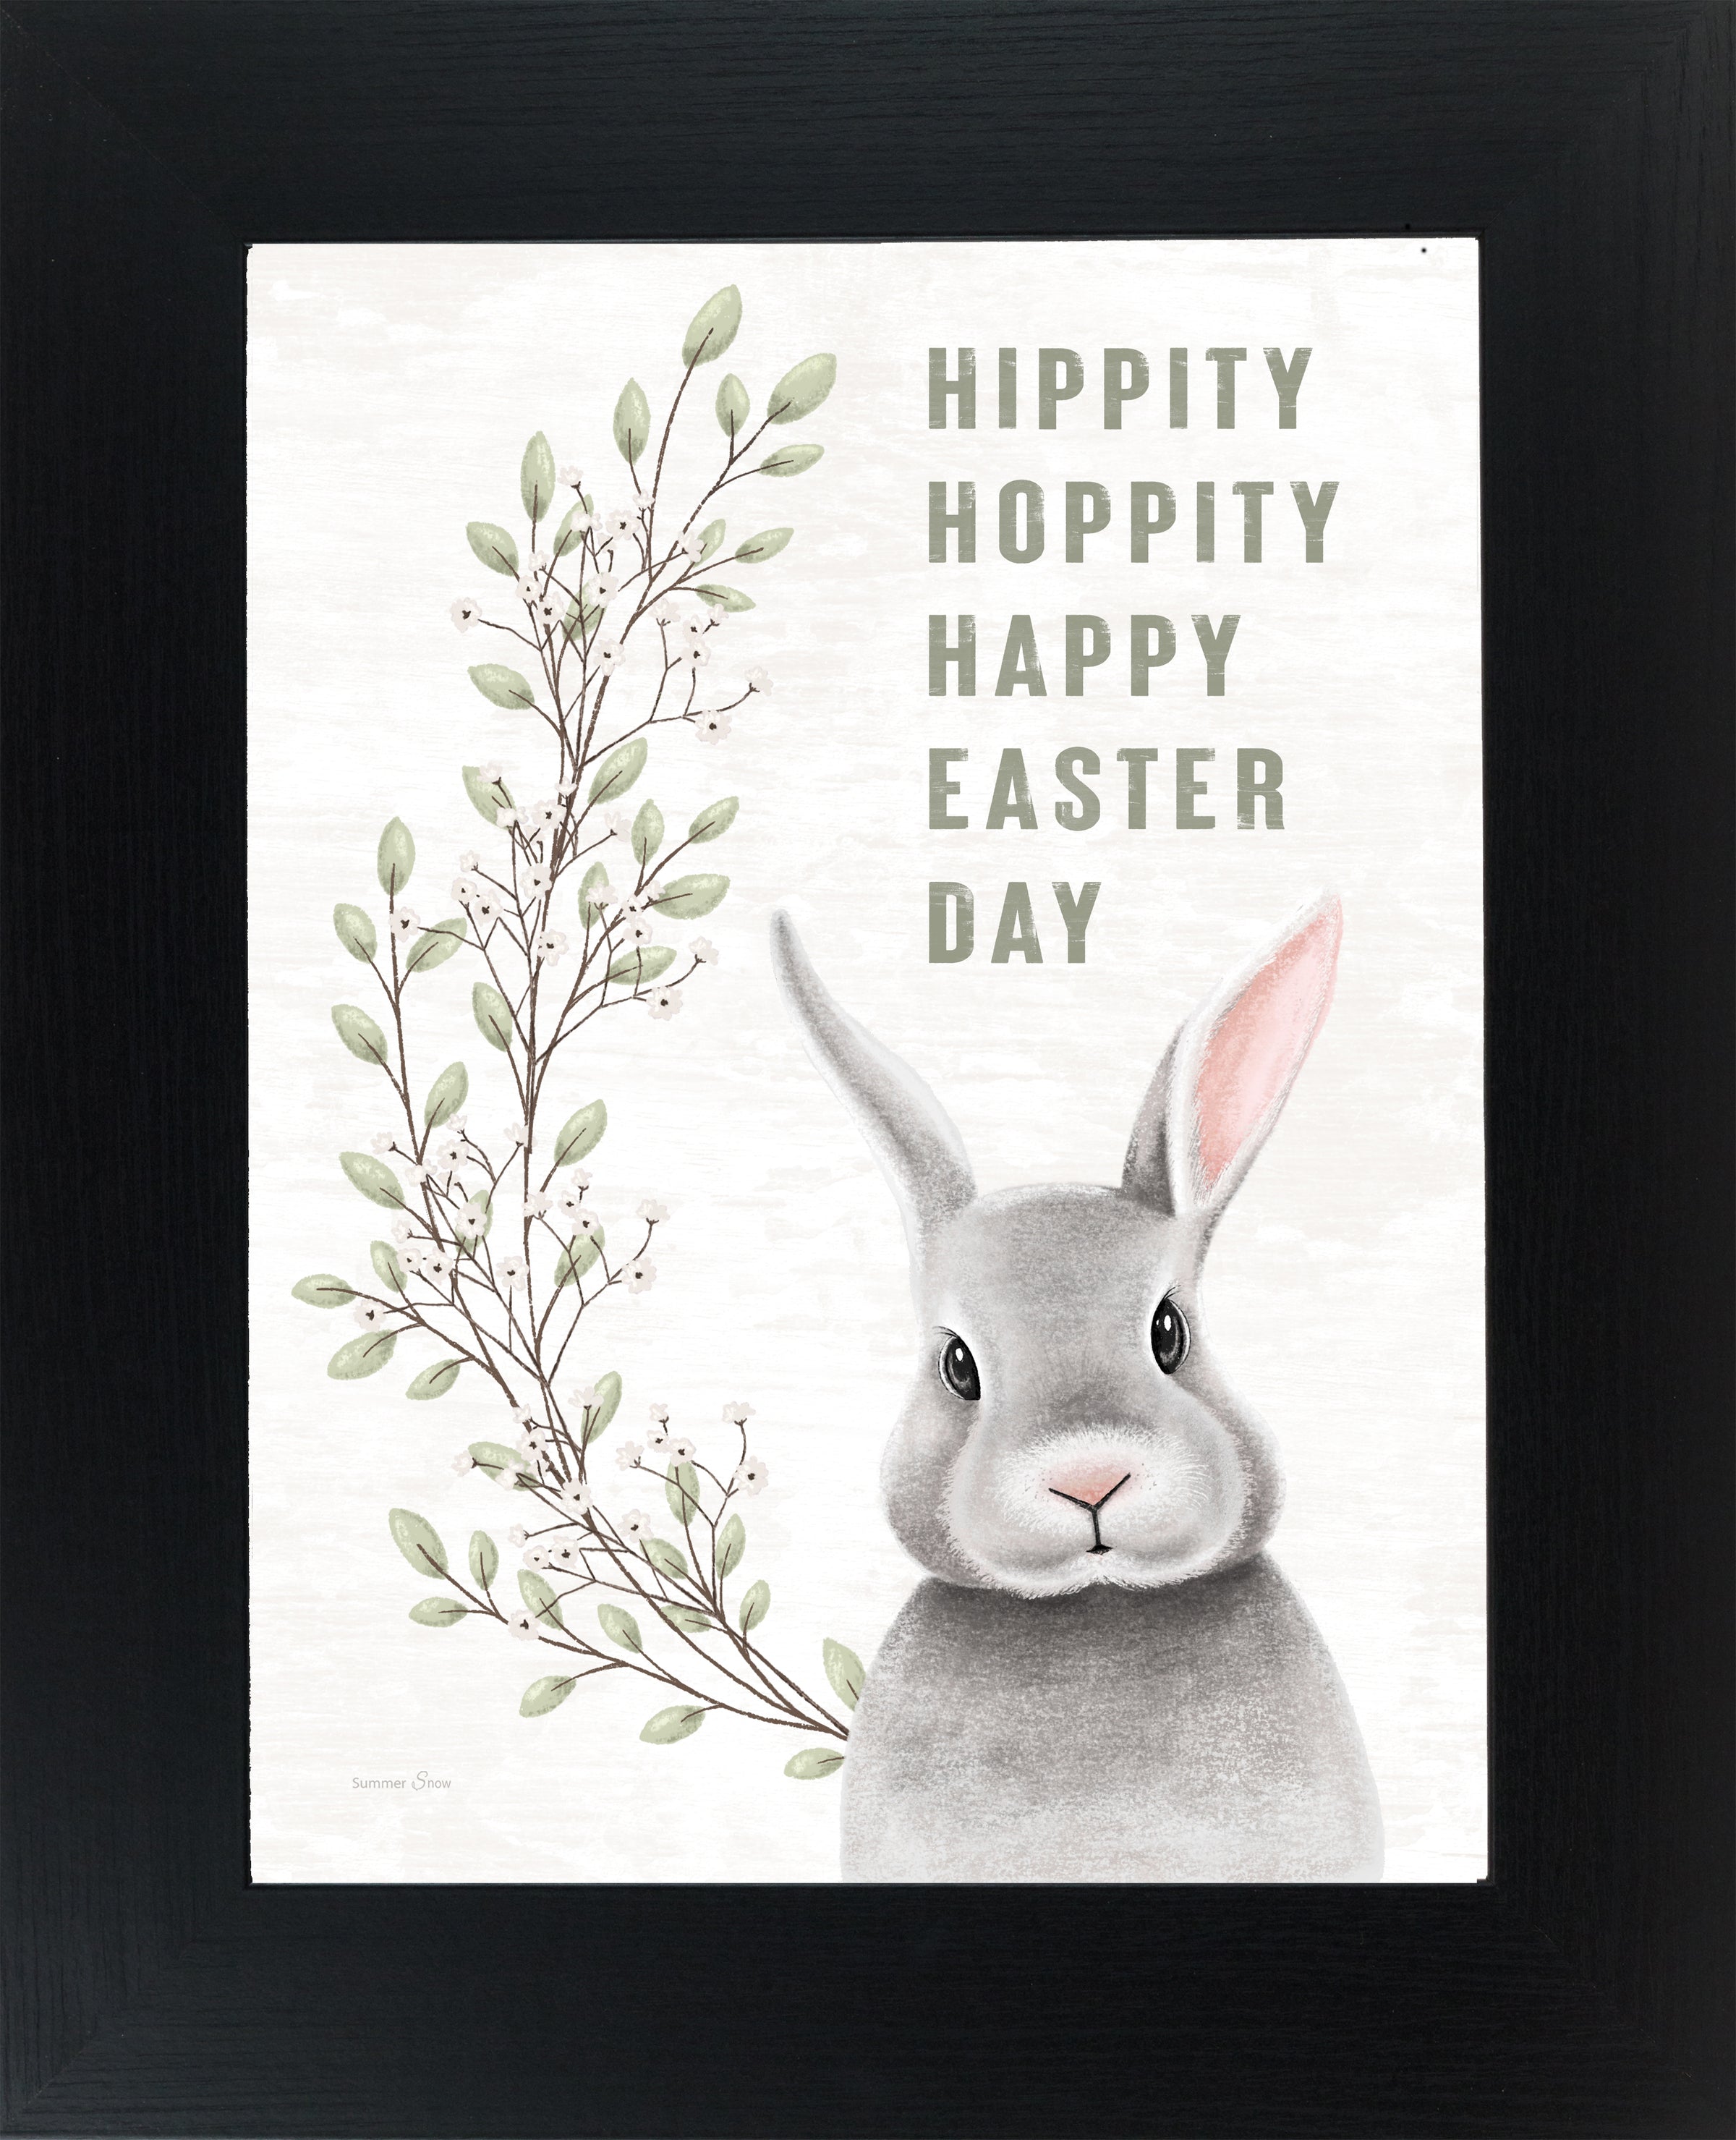 Hippity Hoppity Happy Easter Day by Summer Snow SA366